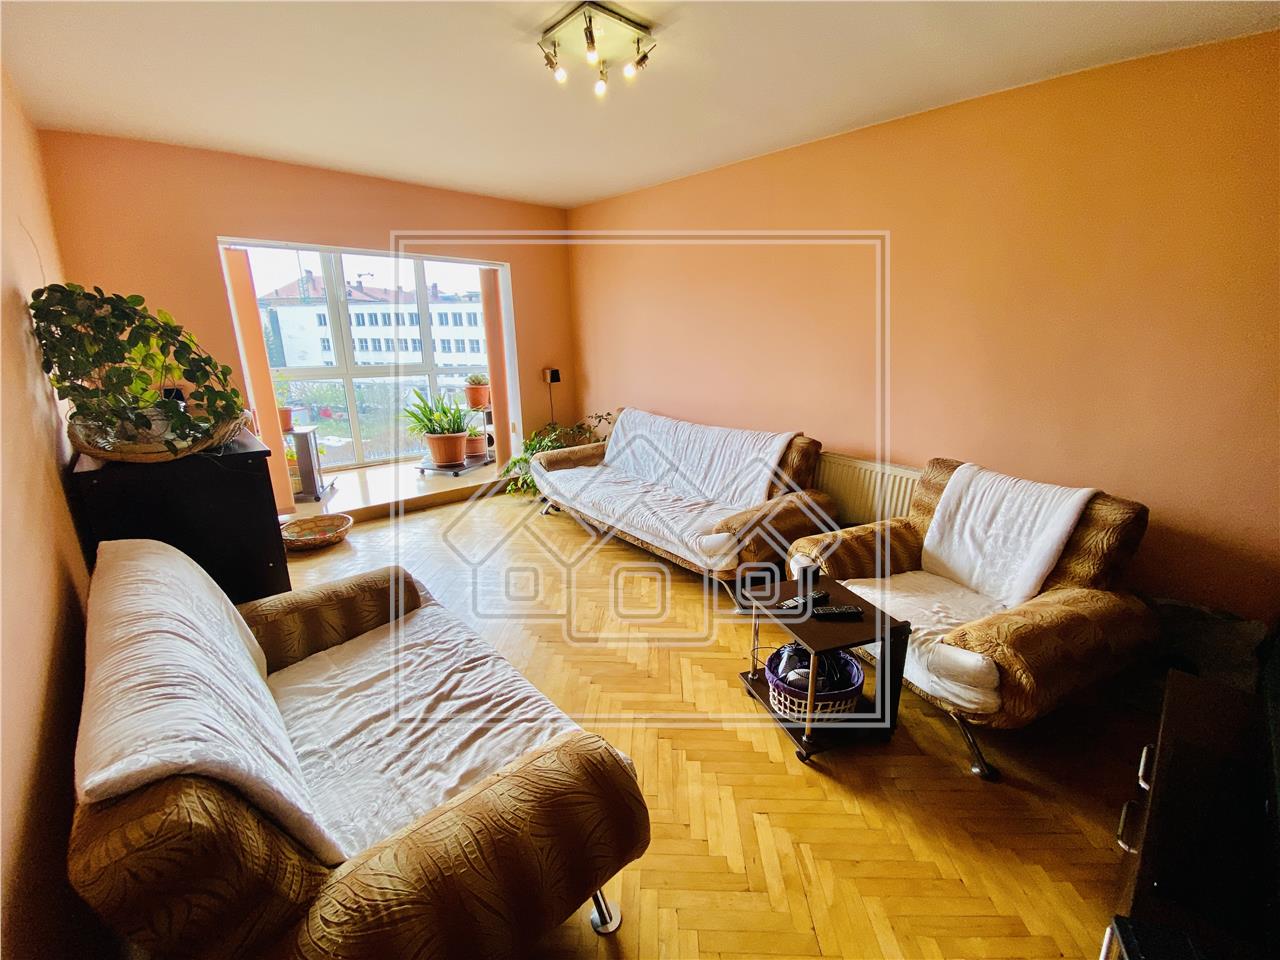 Apartament de vanzare in Sibiu -3 camere si 2 balcoane -Scoala de Inot